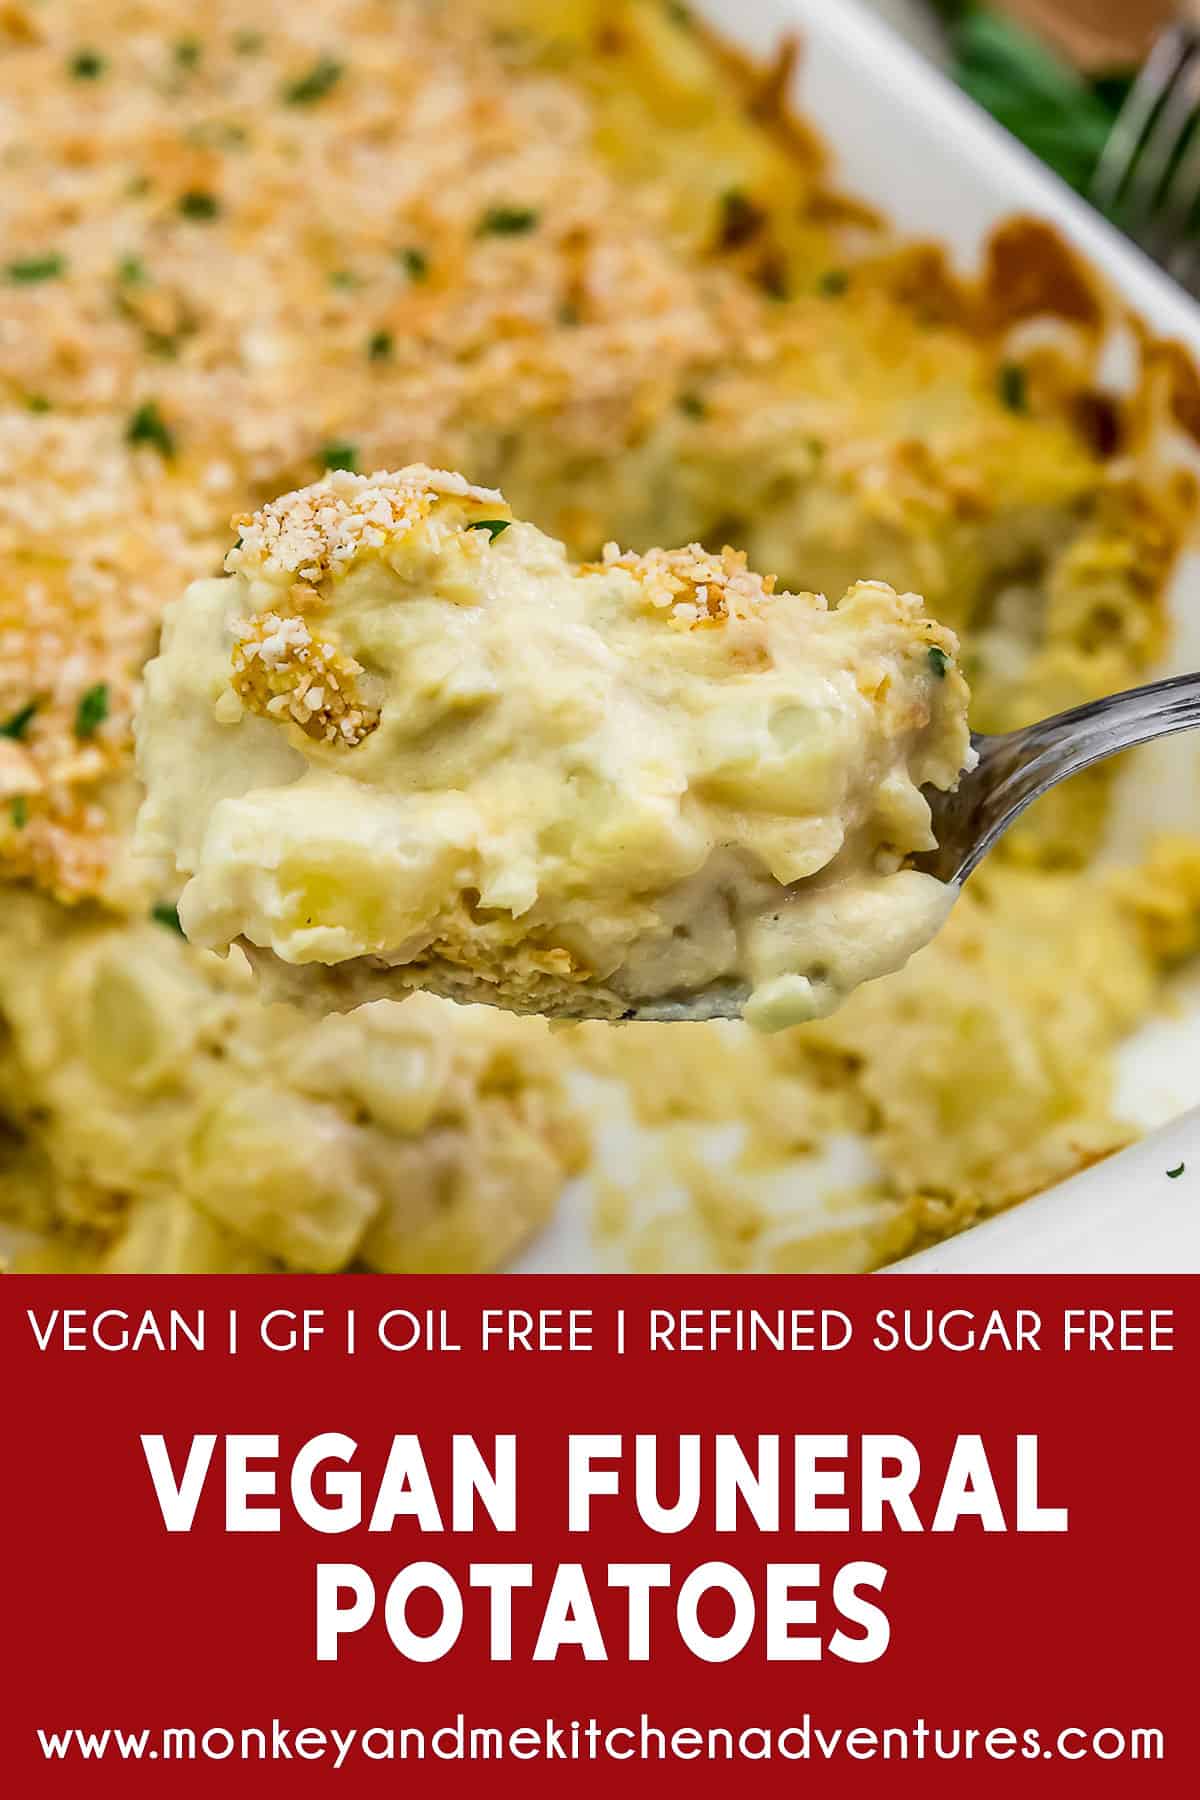 Vegan Funeral Potatoes with text description